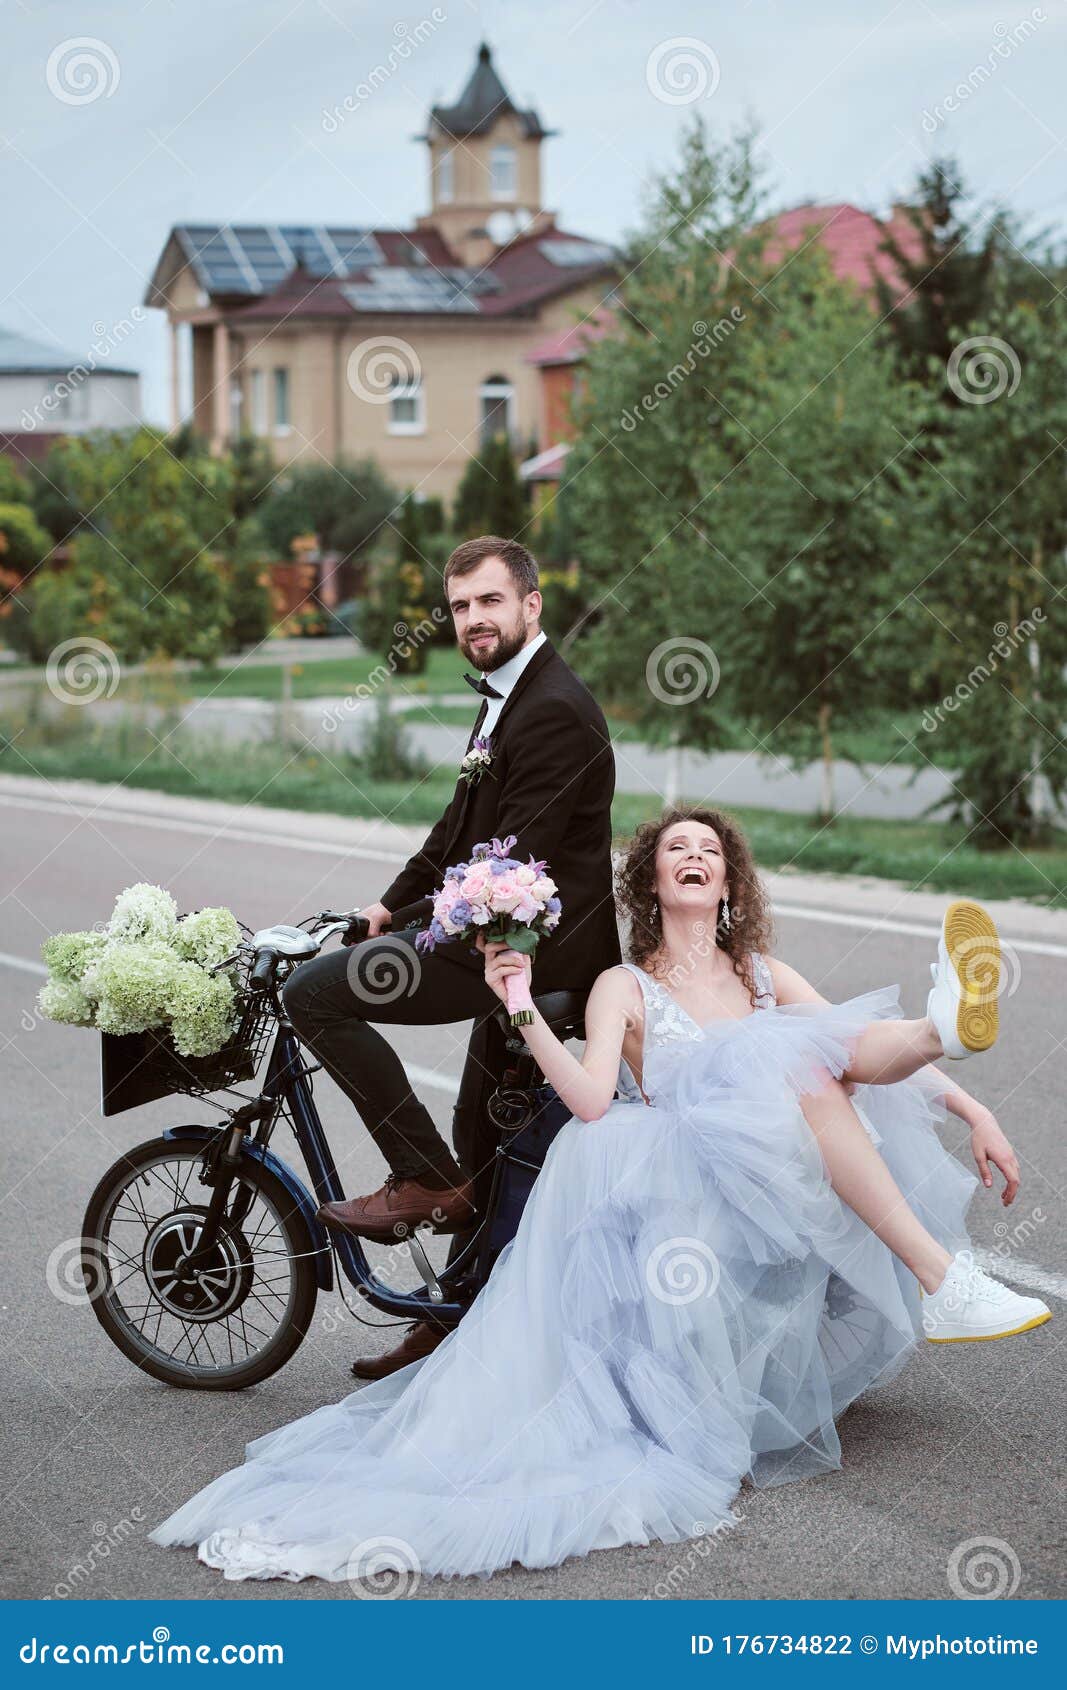 Wedding Party Photo Ideas |